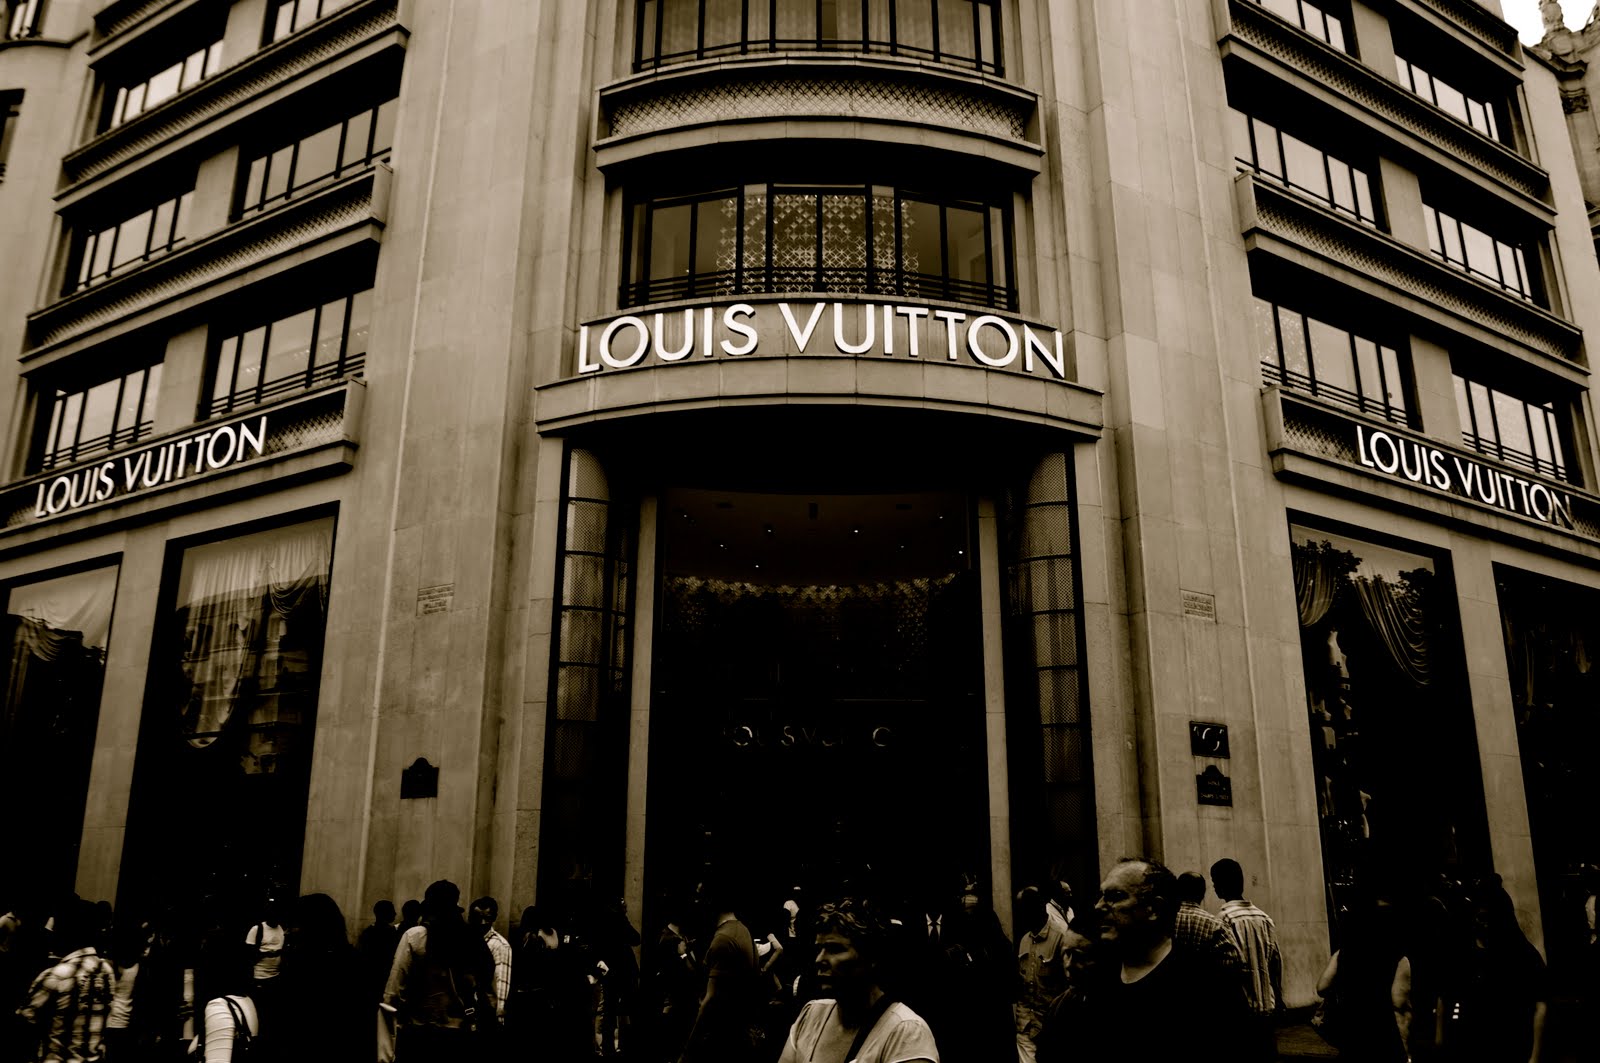 siopaella : *GULP* Louis Vuitton prices are going up!